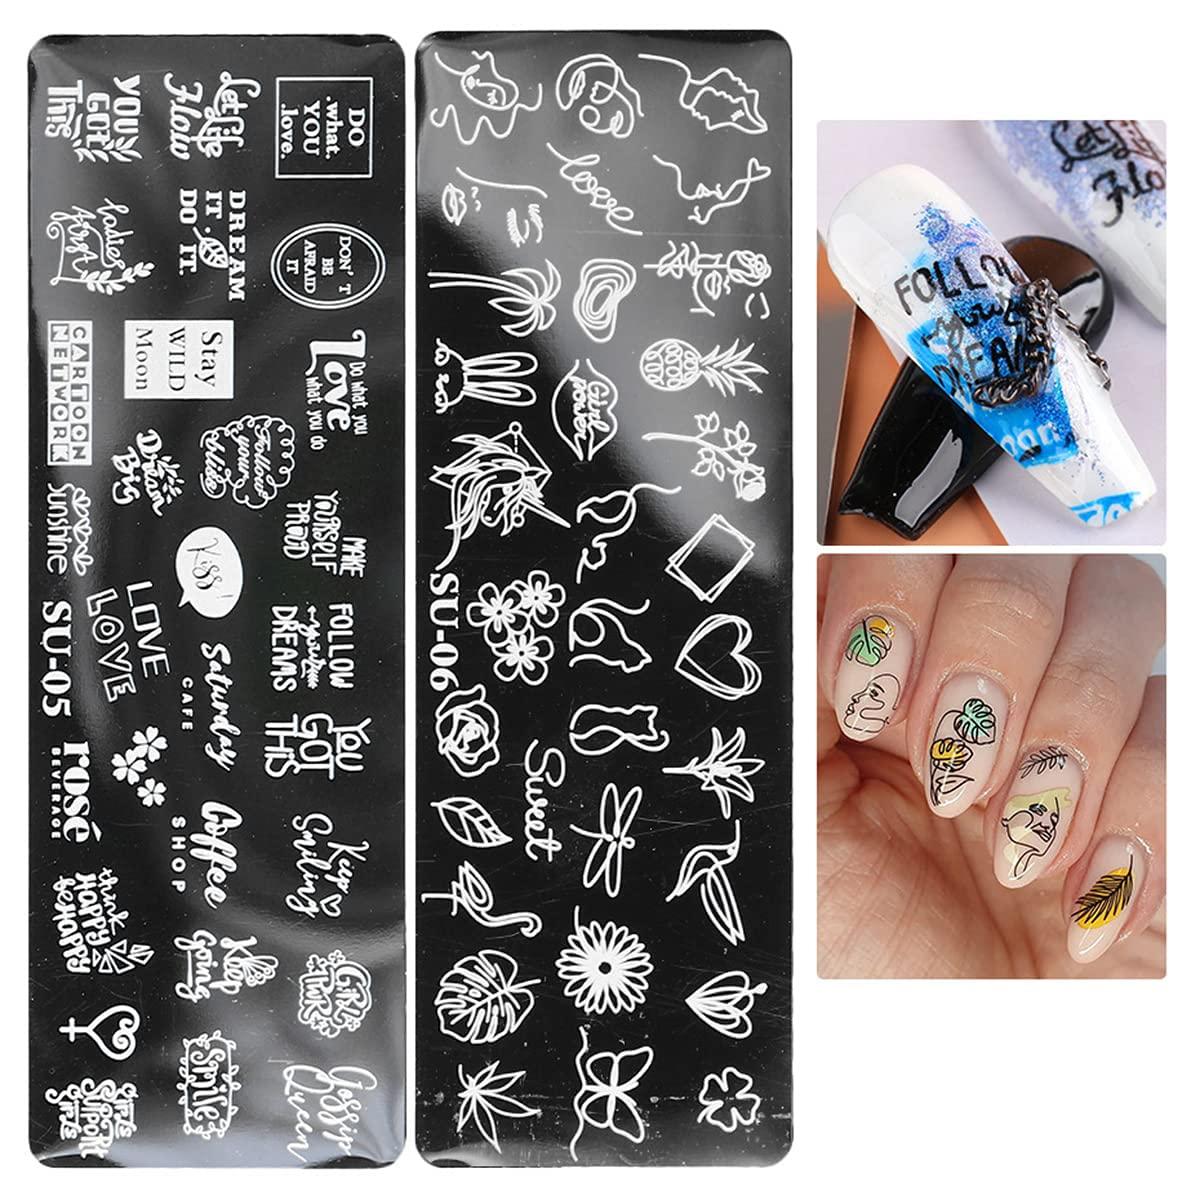 Reusable Nail Art Stamping Plates Flower Nail Stencils Template - Gels  Polish